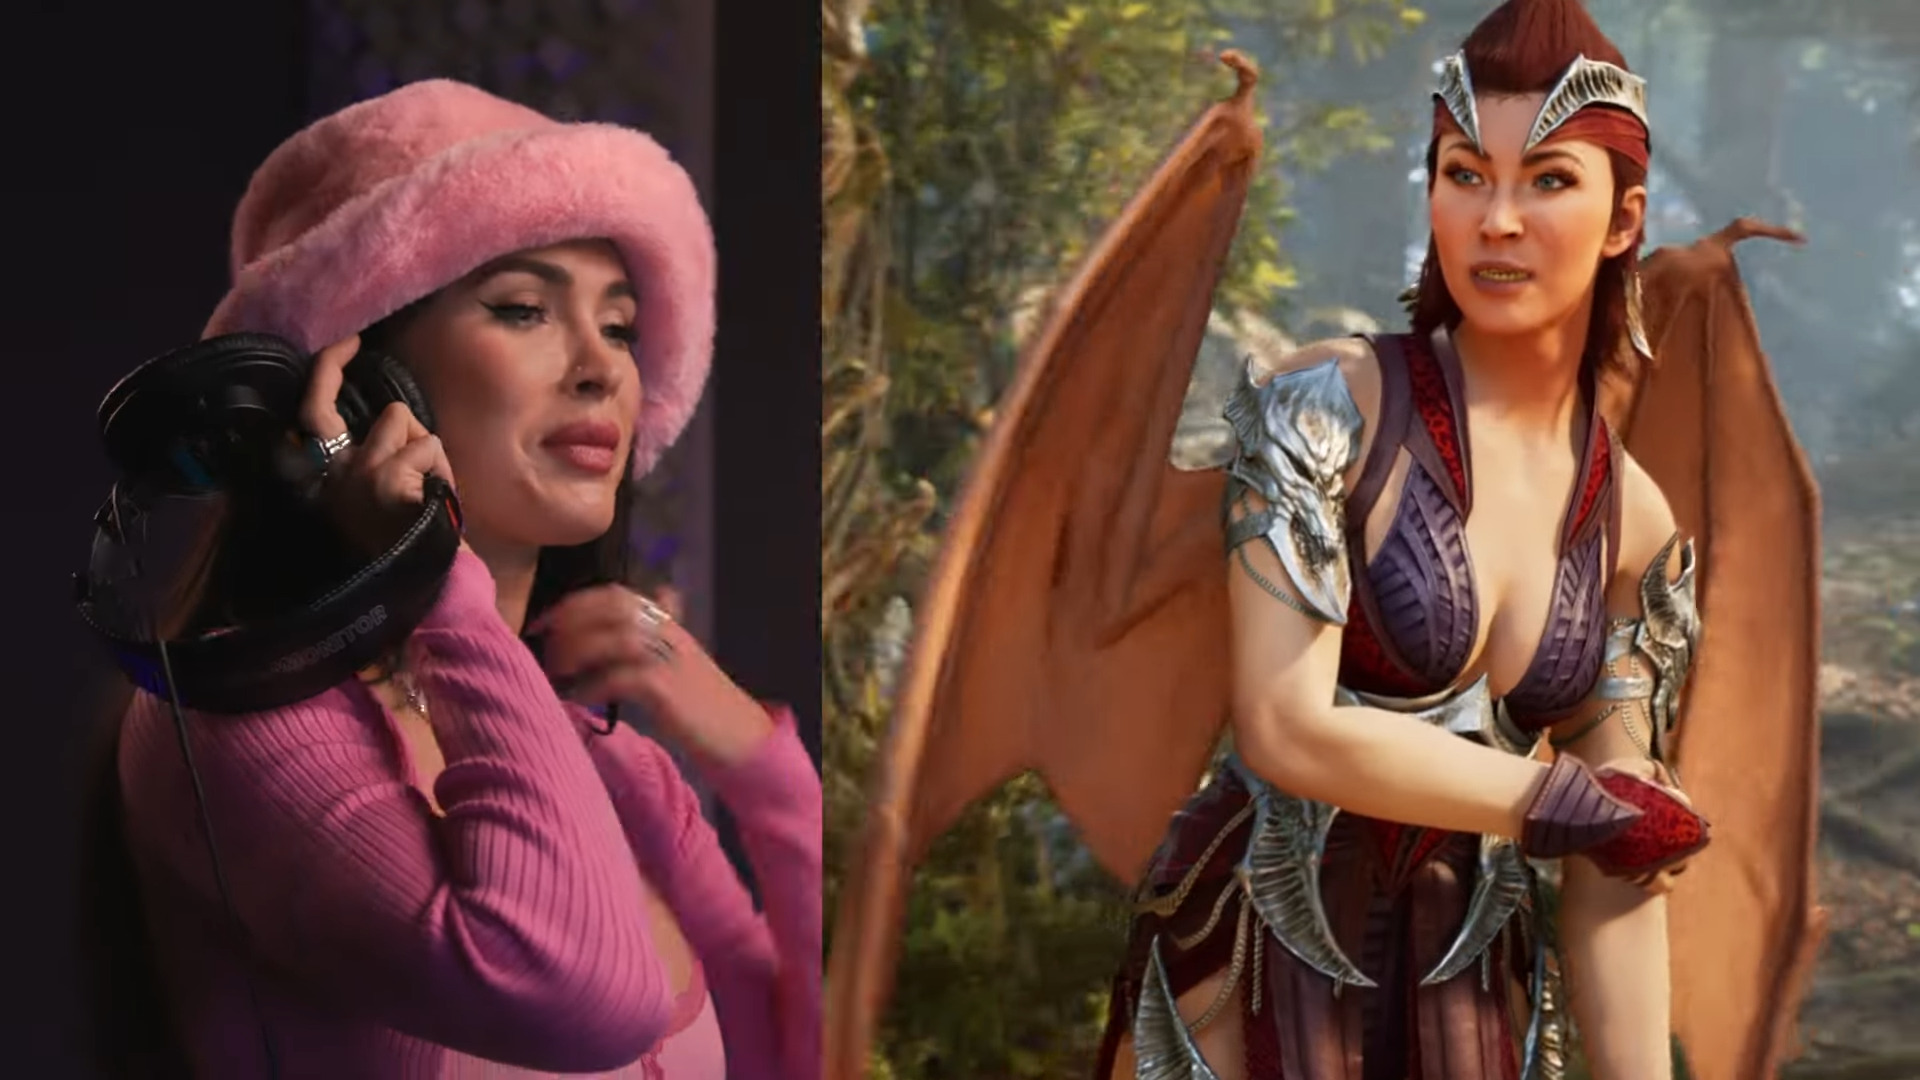 The New 'Mortal Kombat' Game Let's You Play As a Vampire Megan Fox